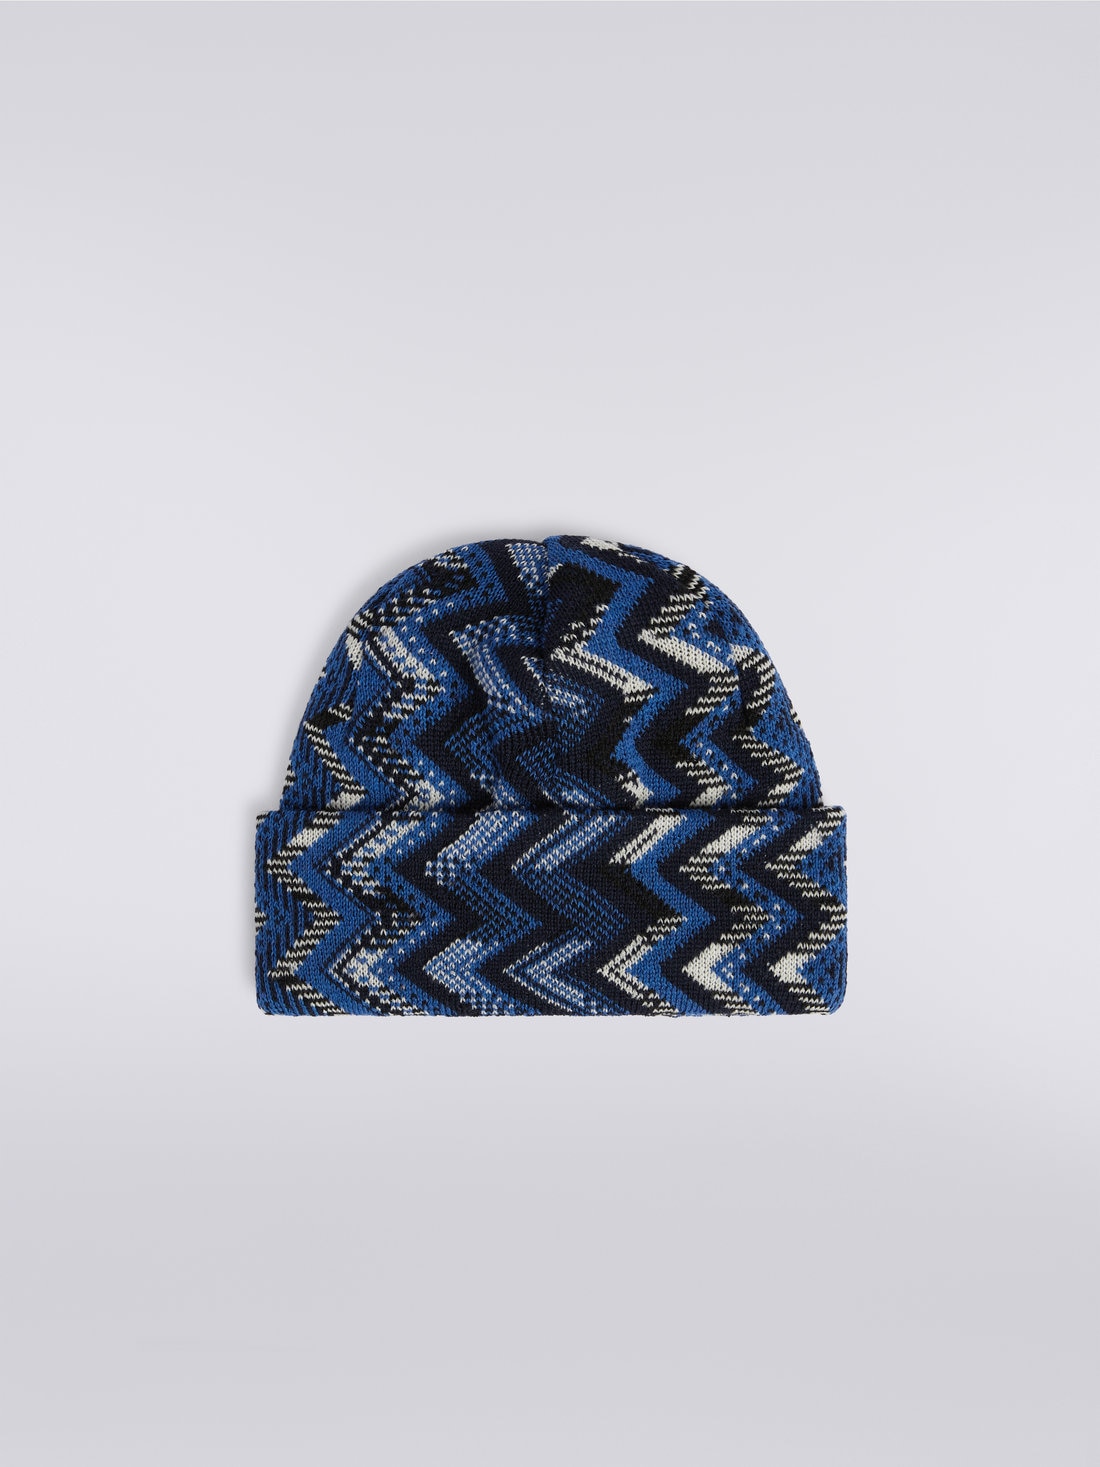 Zigzag wool knit hat, Multicoloured  - 8053147023090 - 0